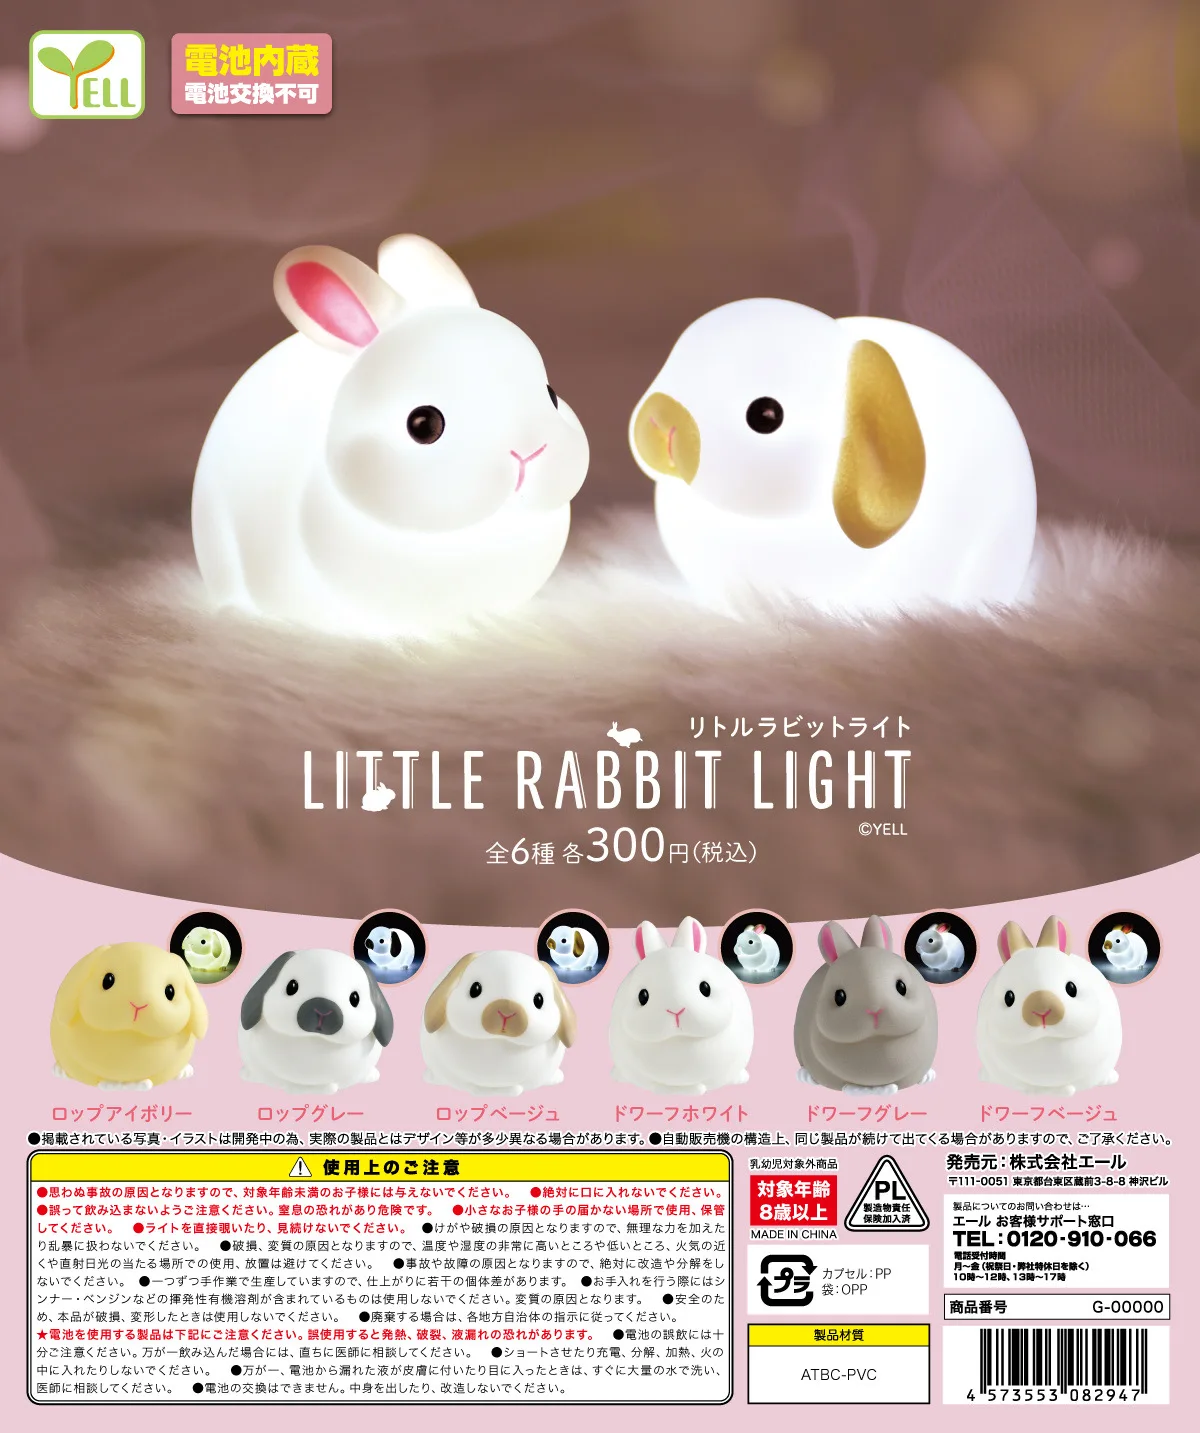 

Yell capsule toys Little Rabbit Light glow softly kawaii cute jade moon Dwarf bunny Lop rabbit gashapon figures